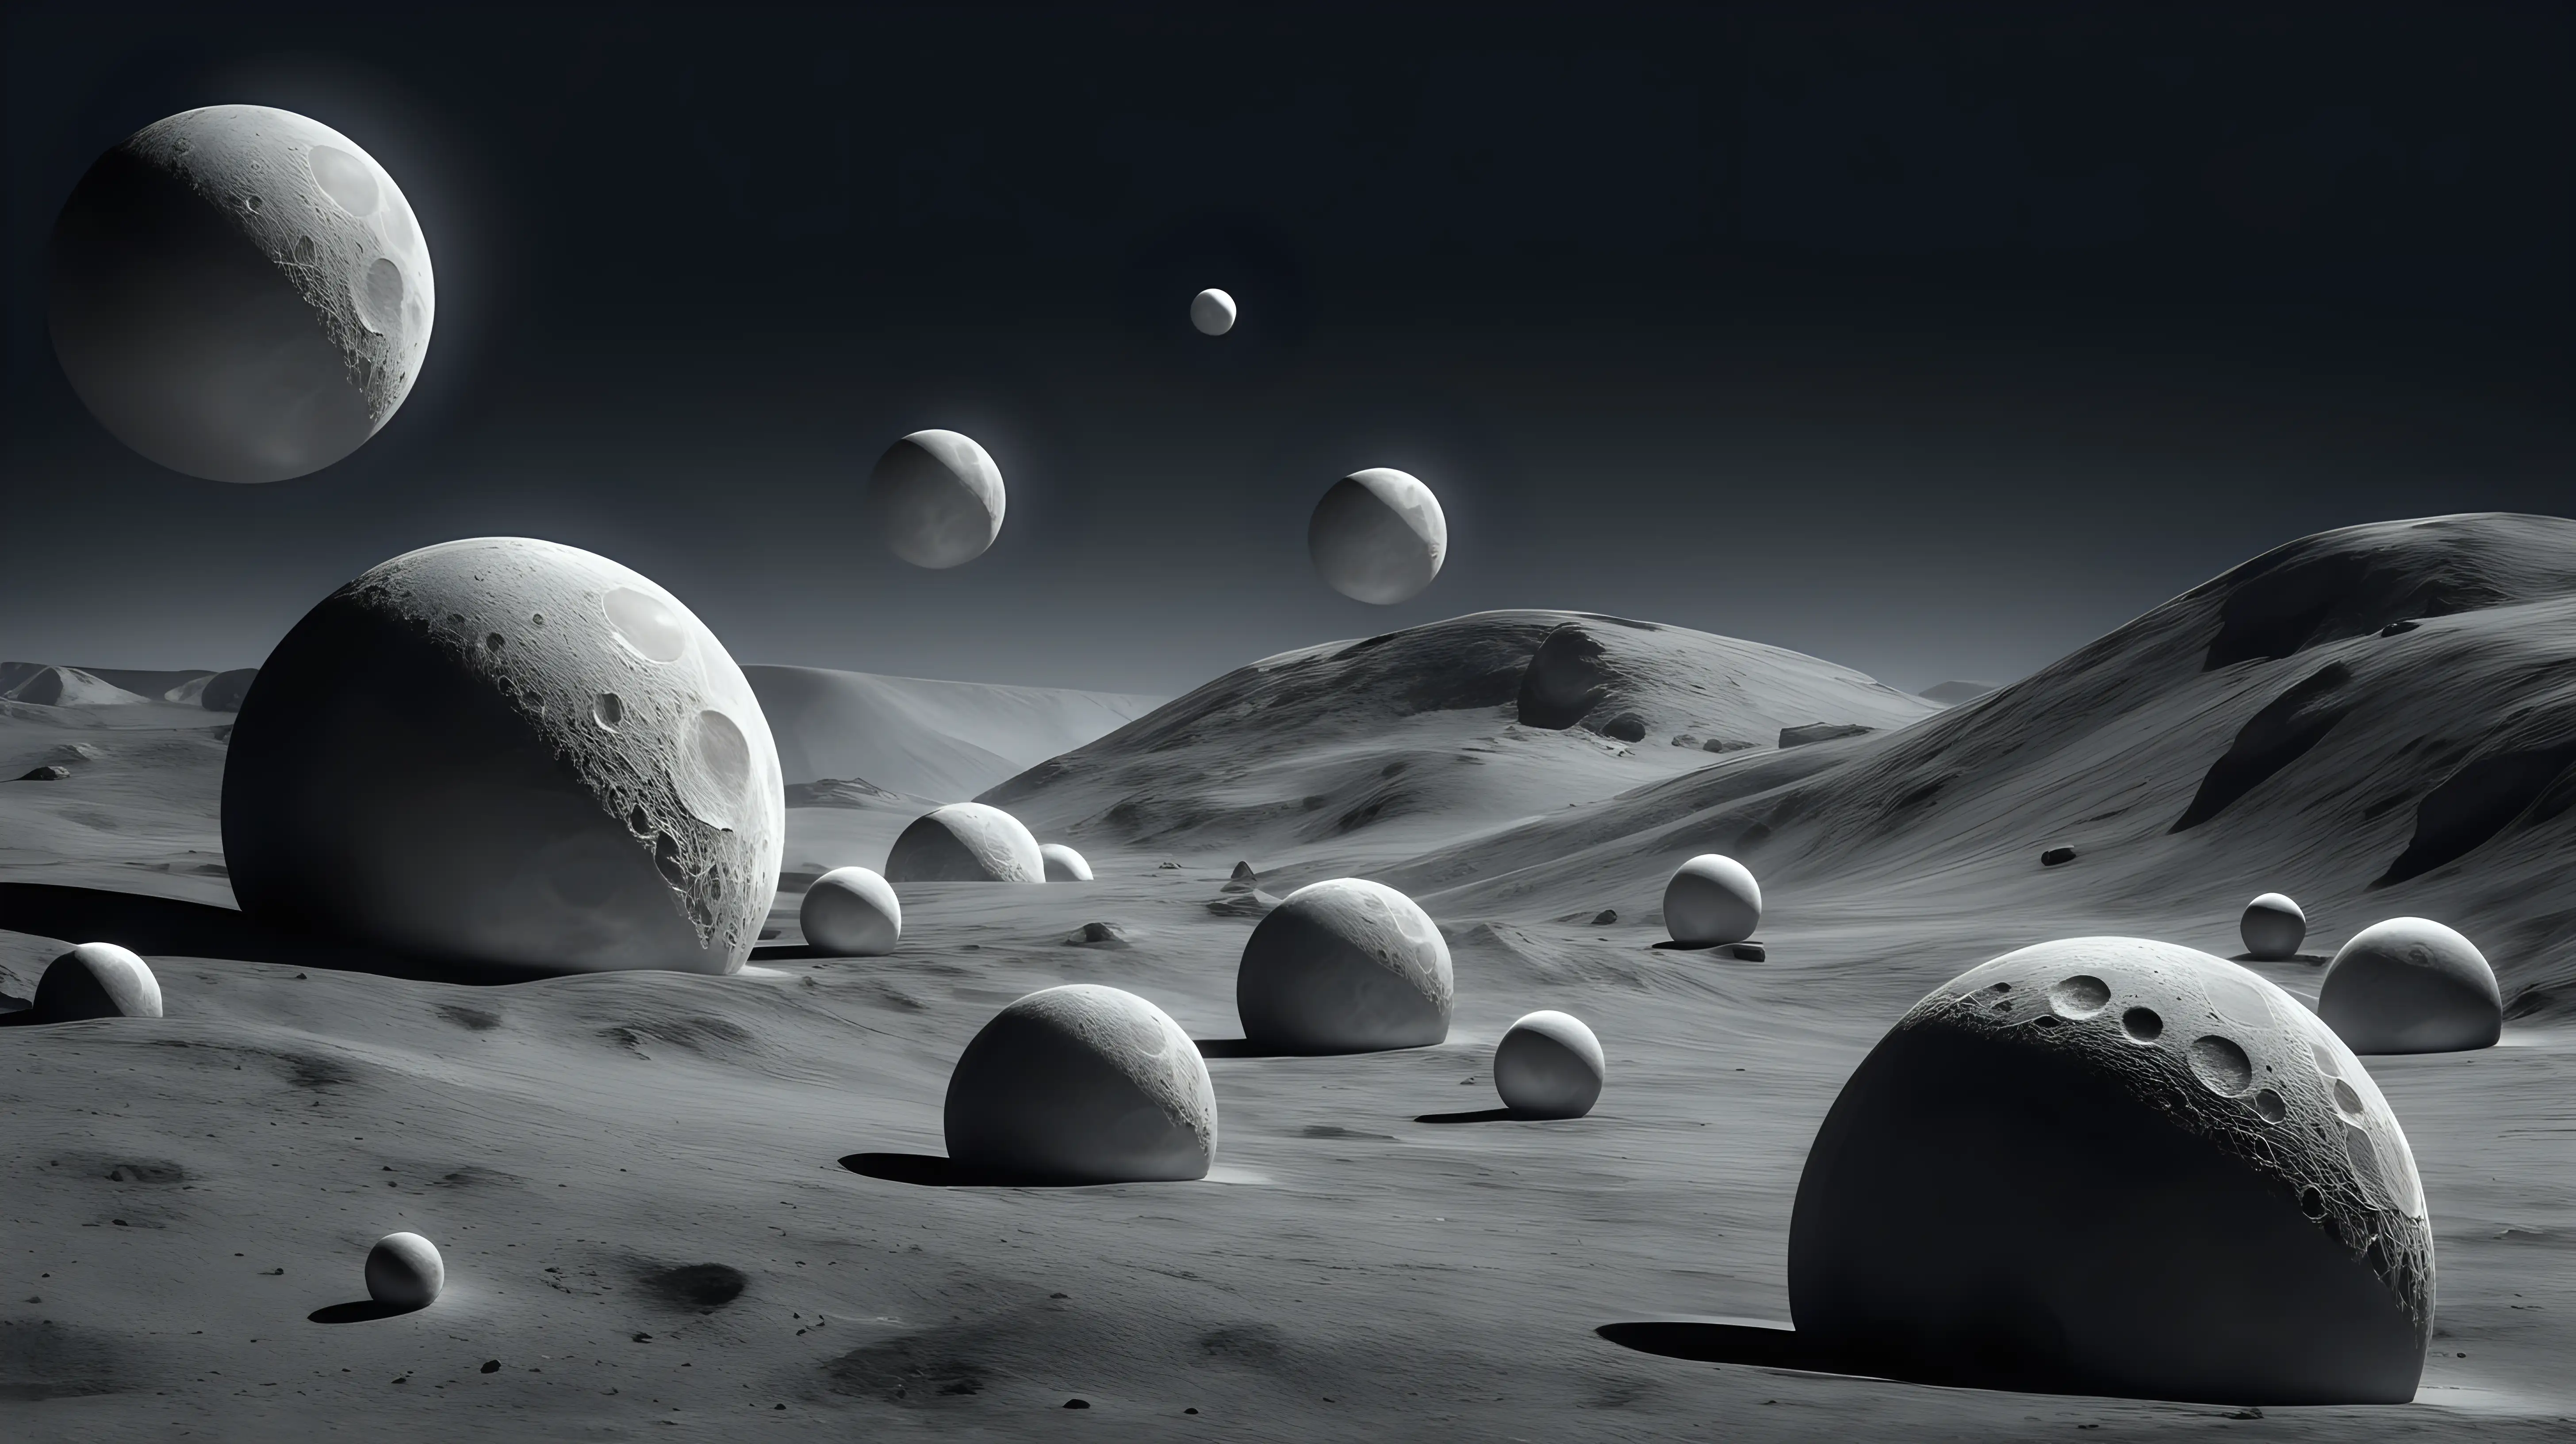 Tranquil Lunar Landscape with Arranged Spheres